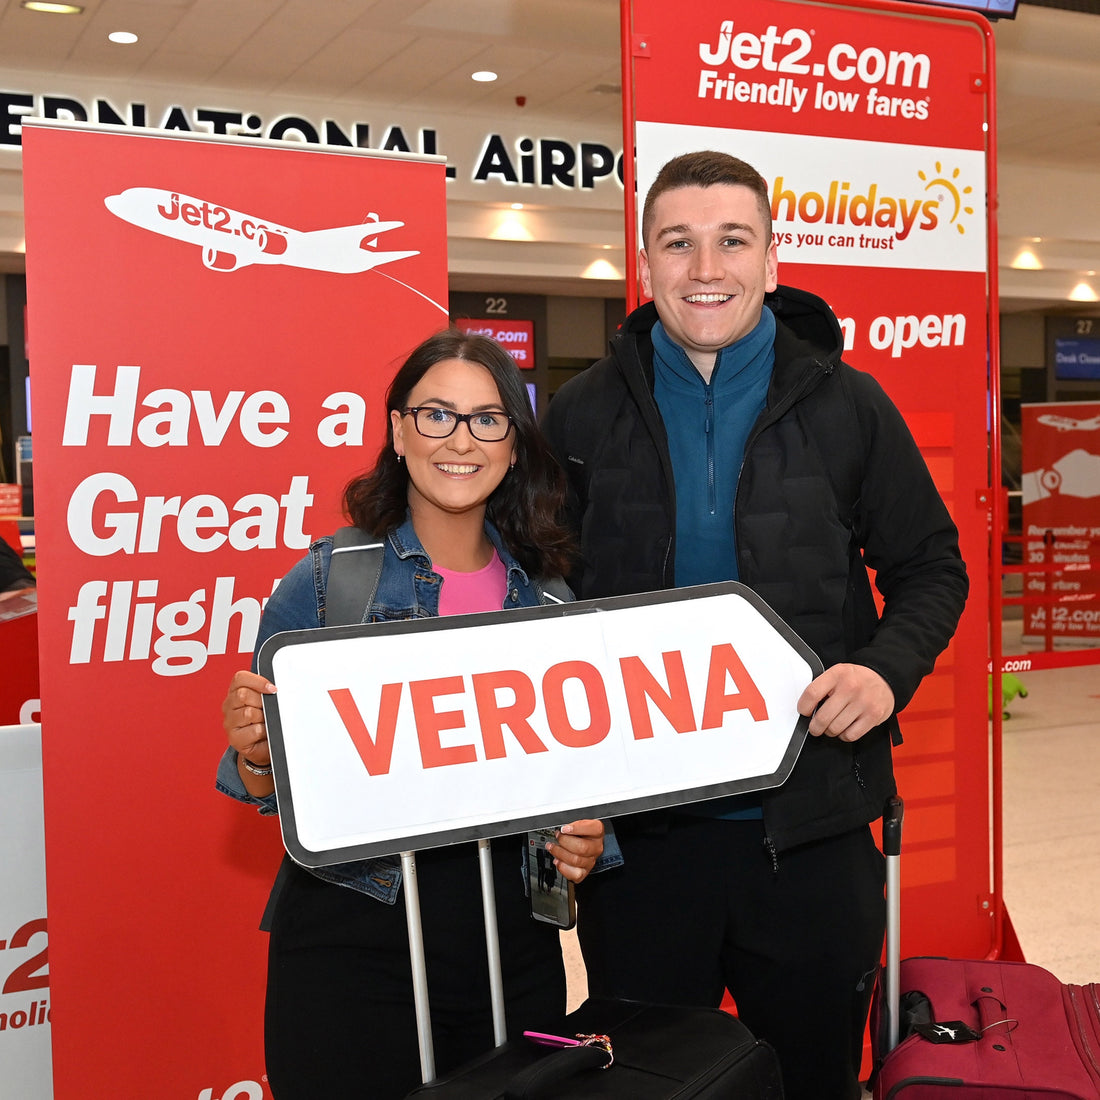 Jet2.com and Jet2holidays now fly Belfast to Verona